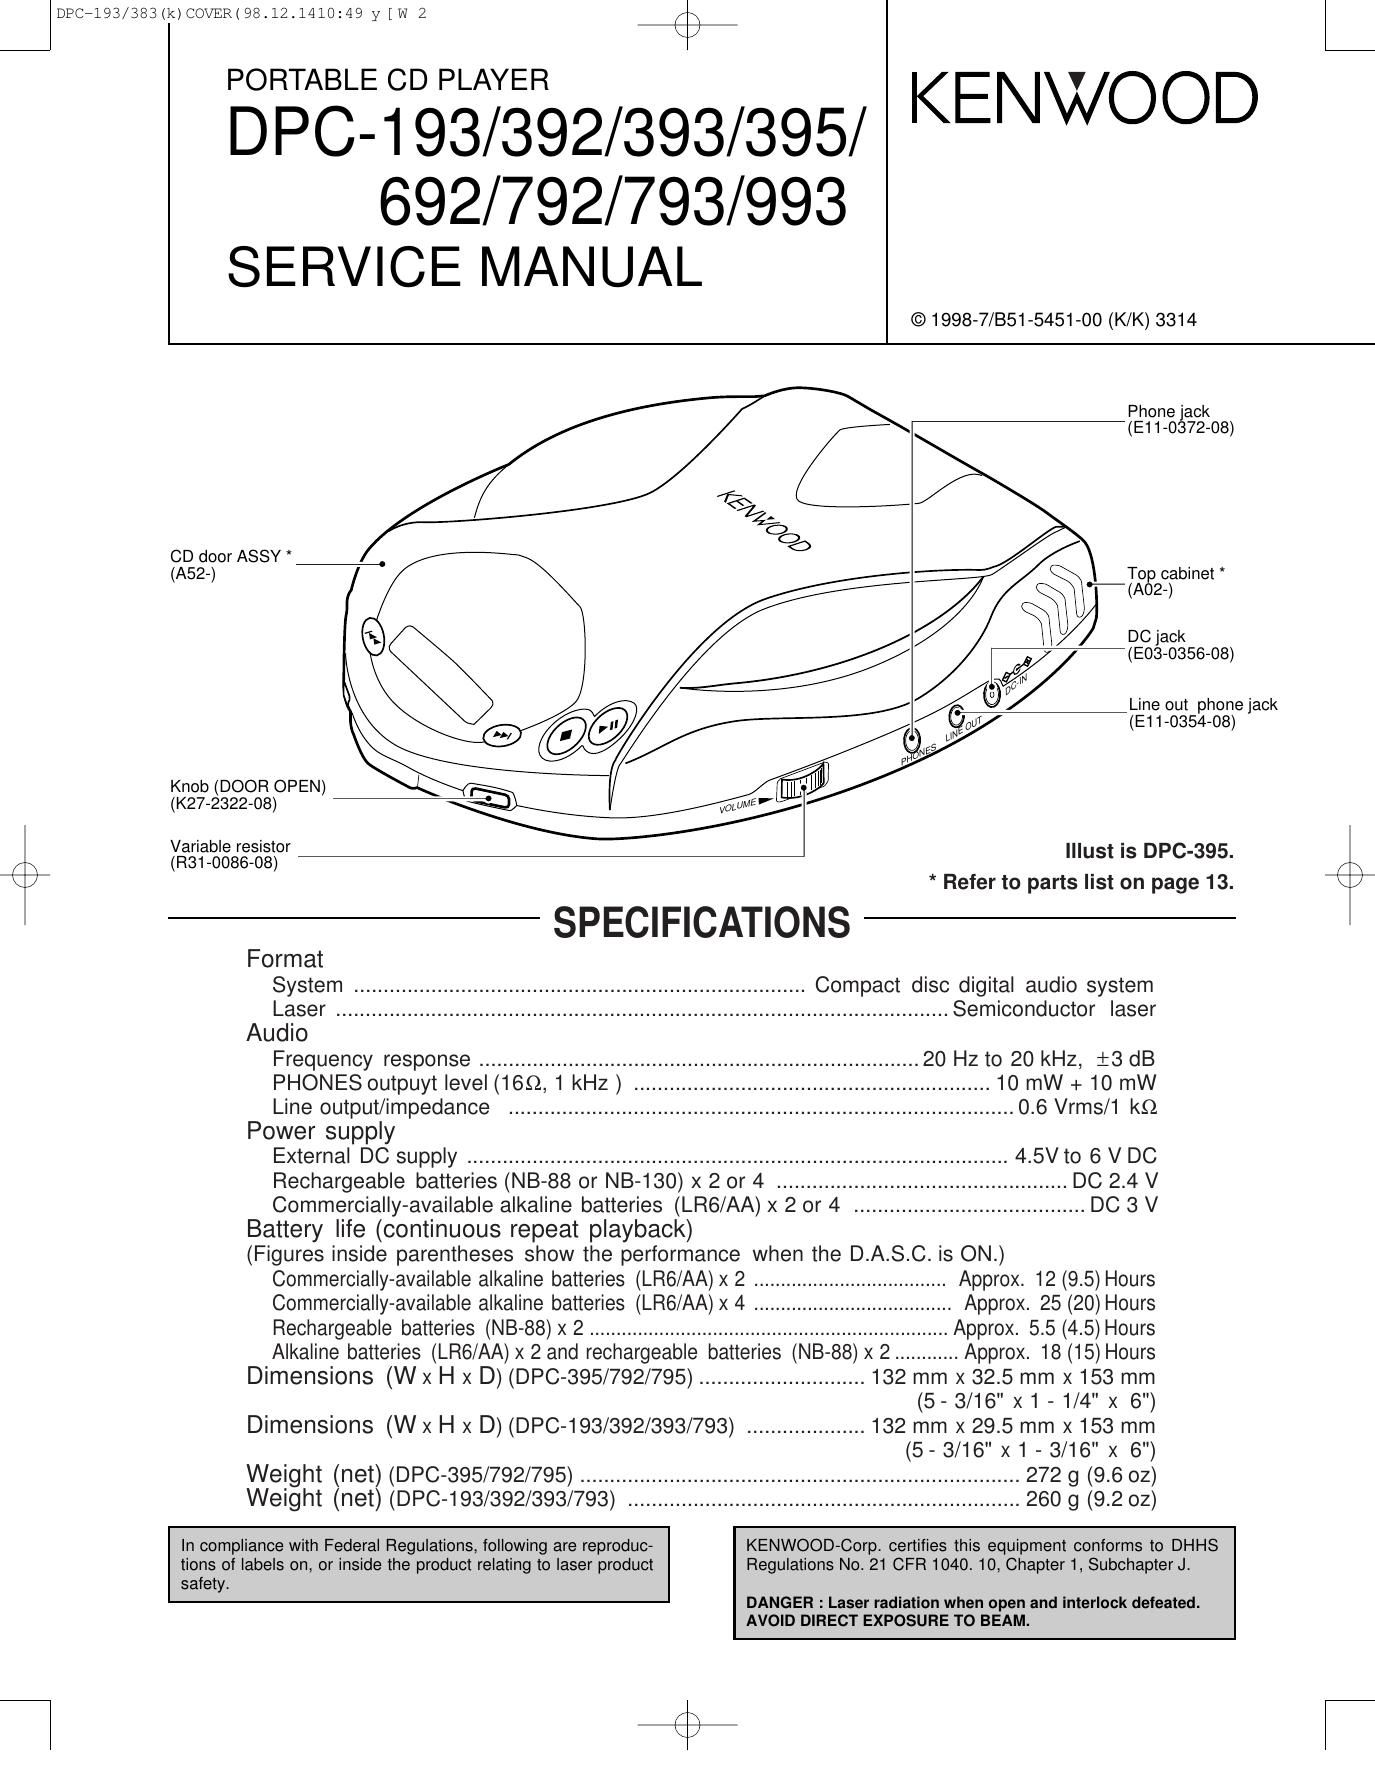 Kenwood DPC 392 Service Manual